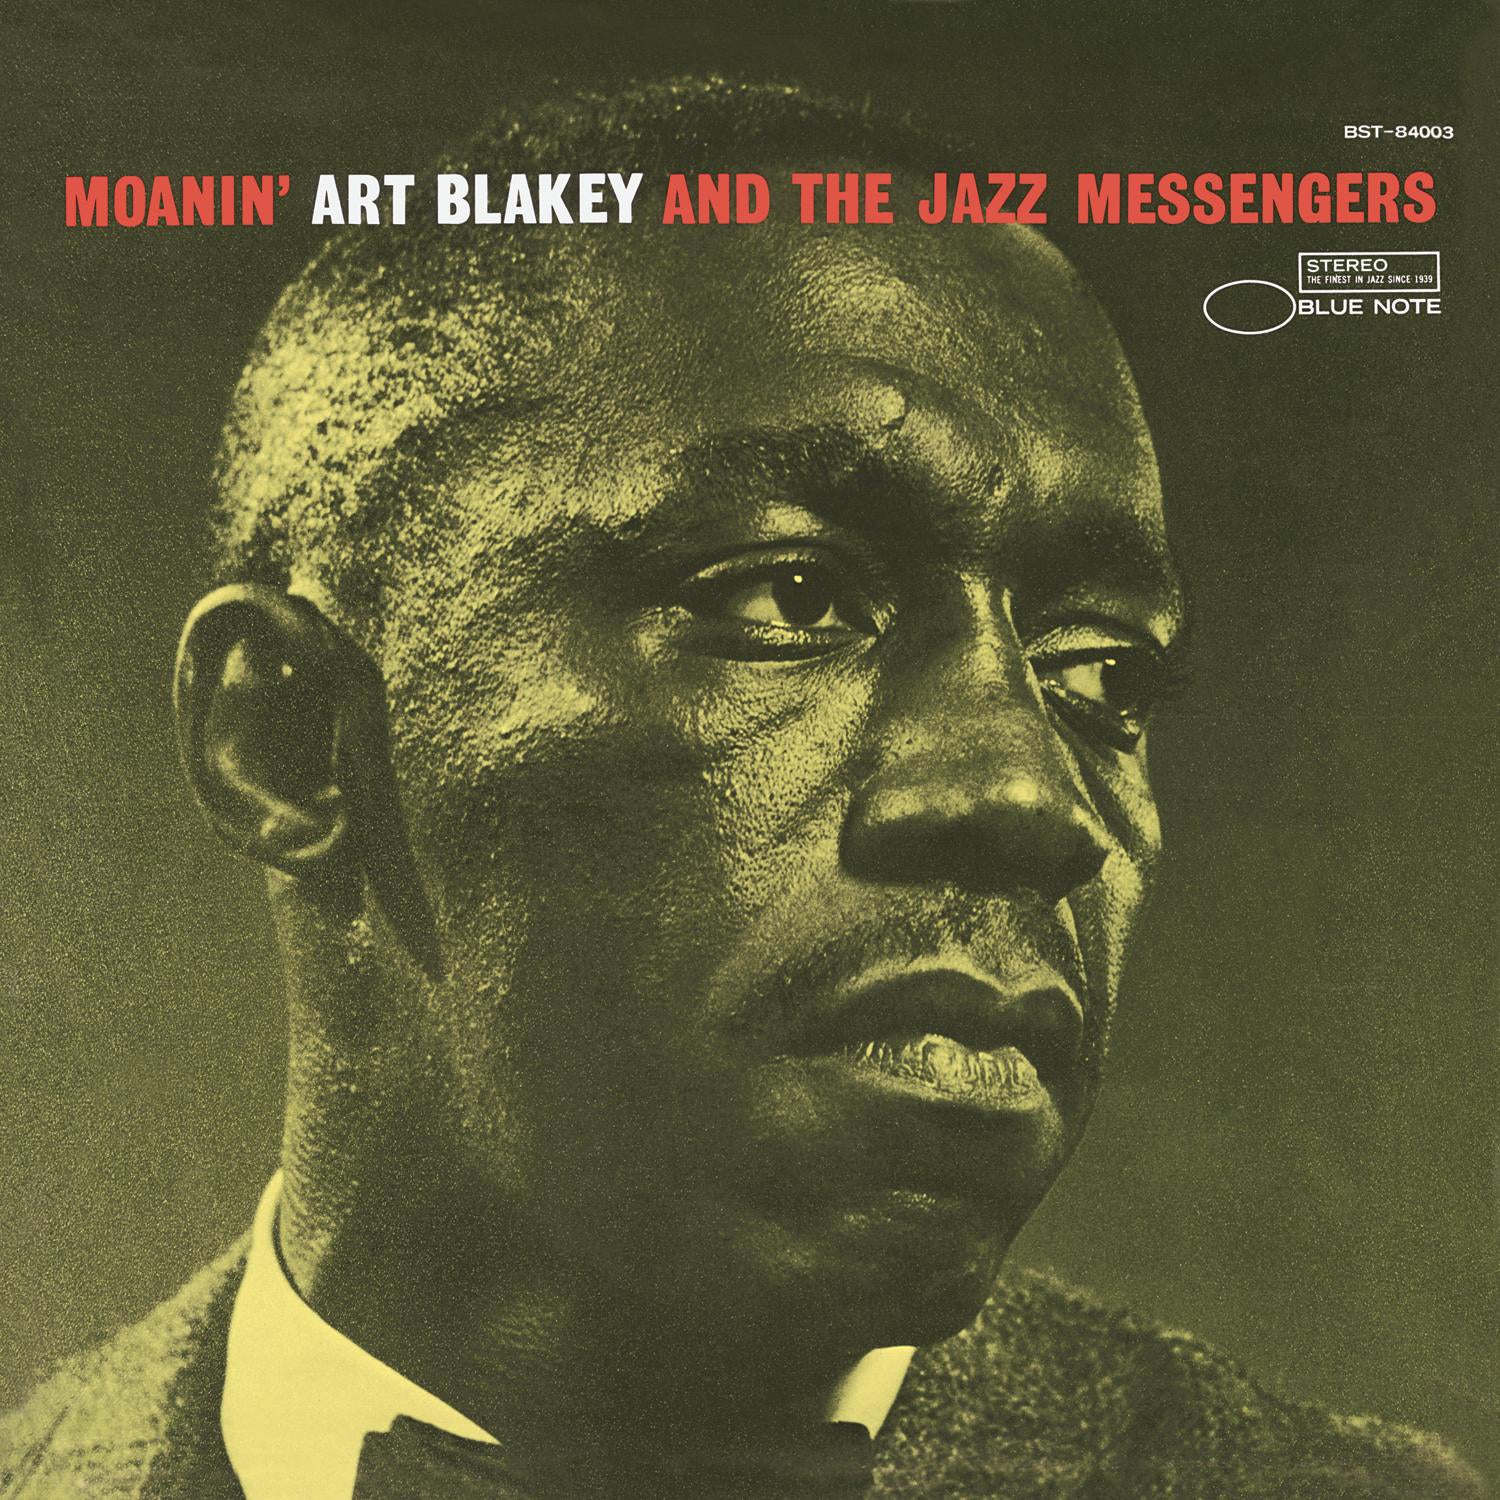 Moanin’ by Art Blakey & The Jazz Messengers